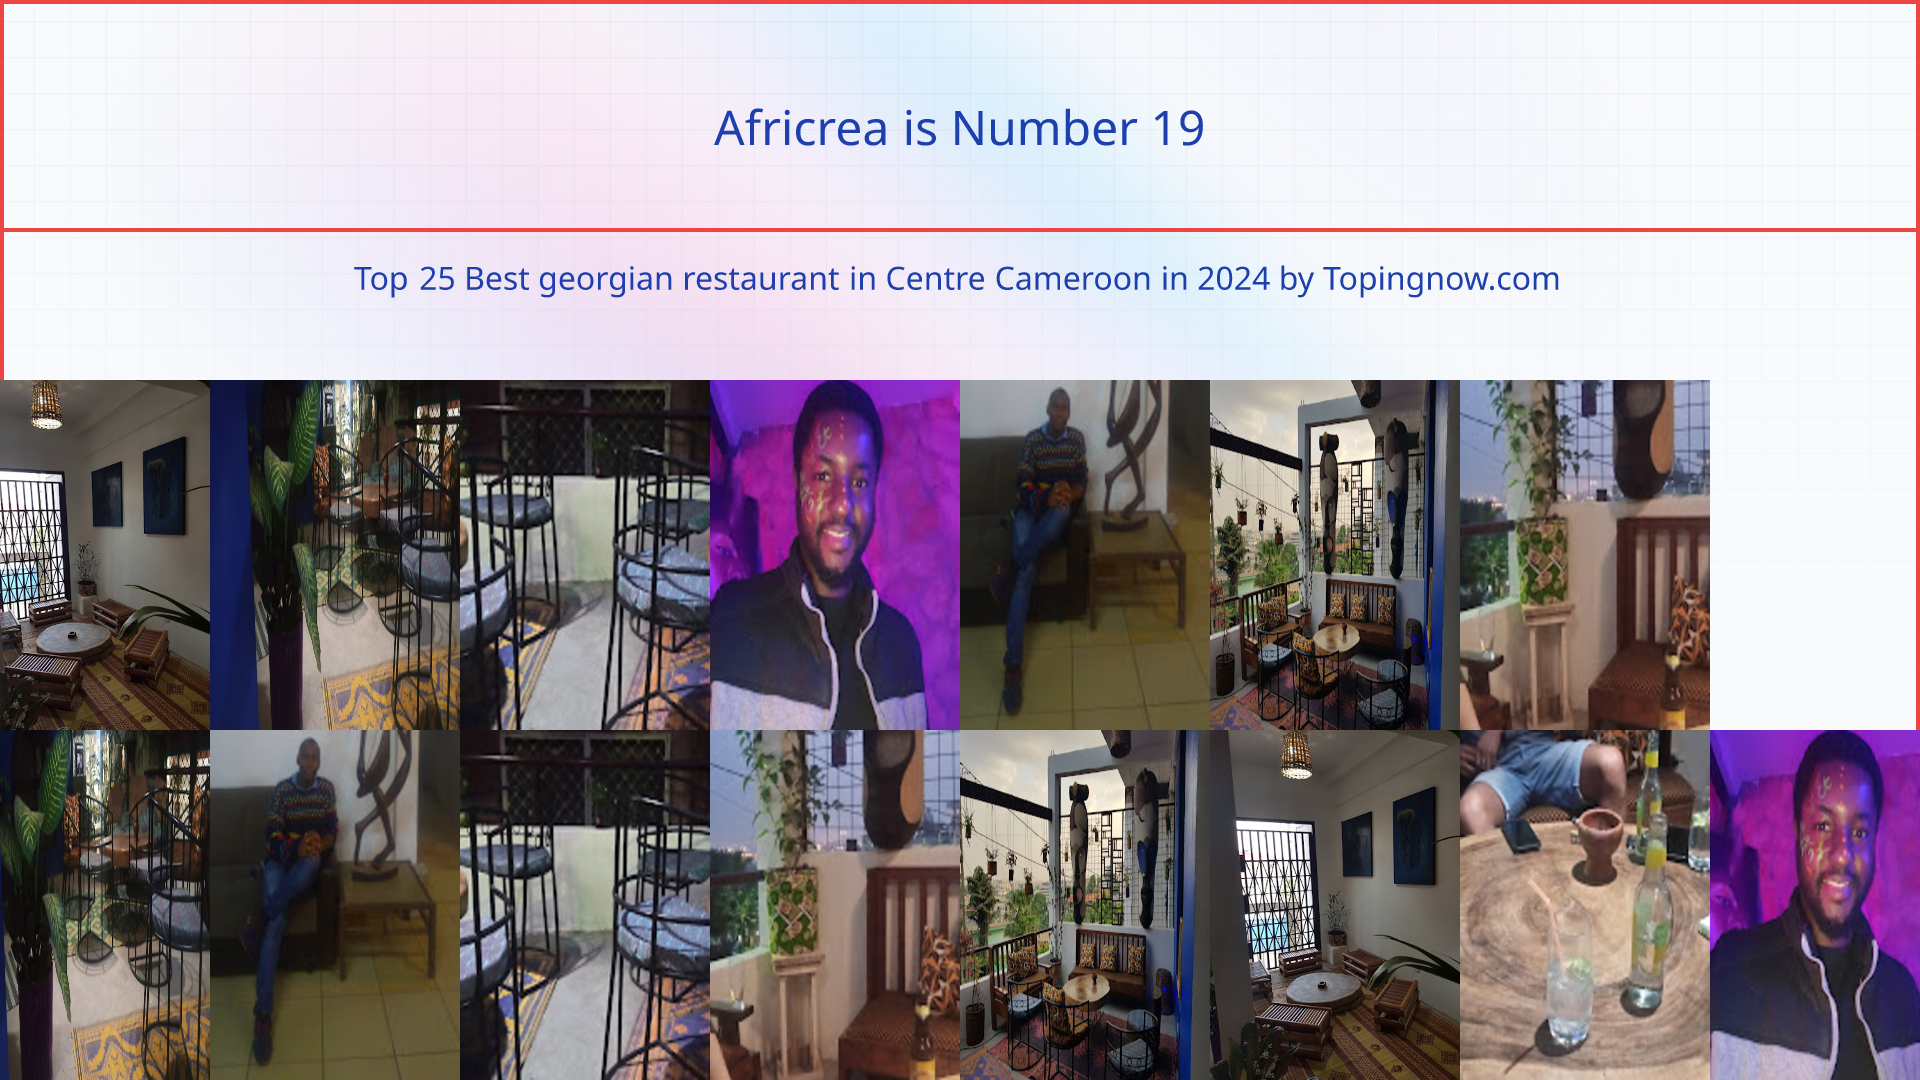 Africrea: Top 25 Best georgian restaurant in Centre Cameroon in 2024